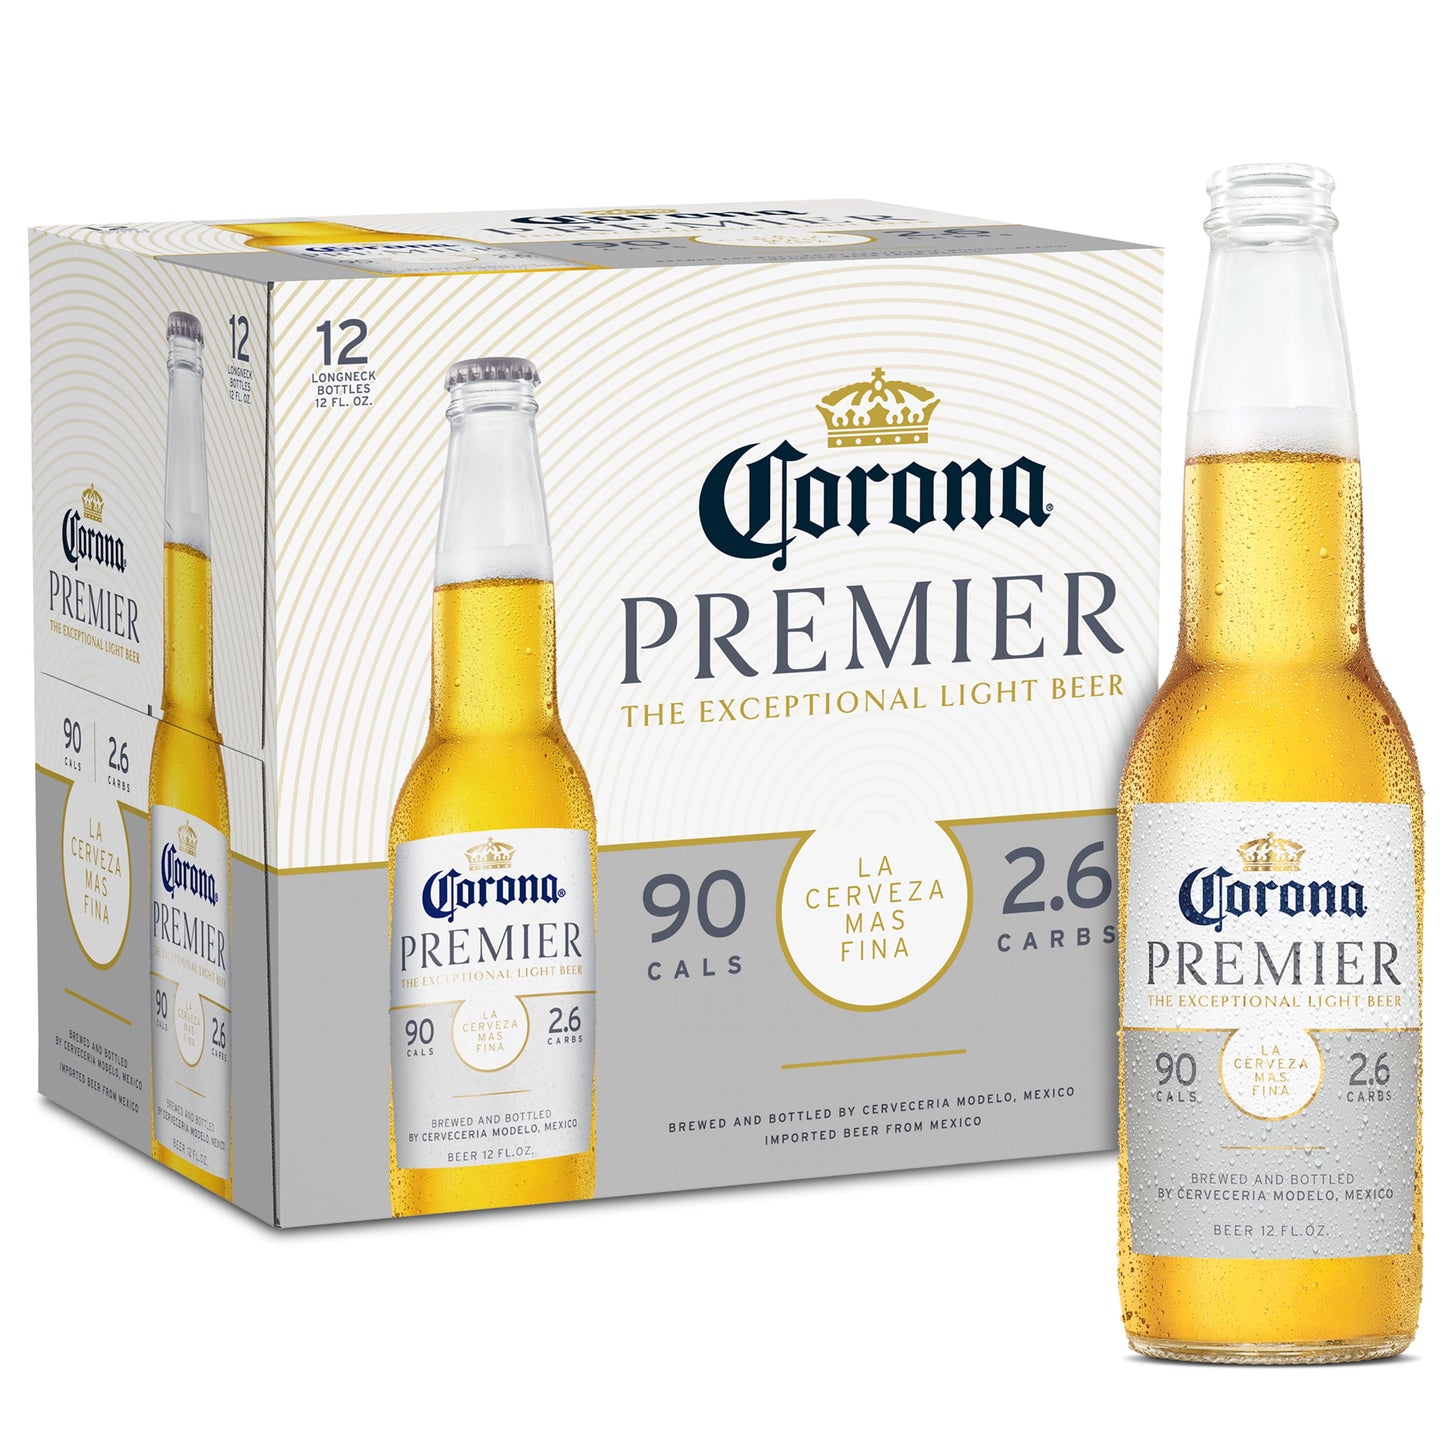 Corona Premier Mexican Lager Import Light Beer, 12 Pack Beer, 12 fl oz Bottles, 4% ABV